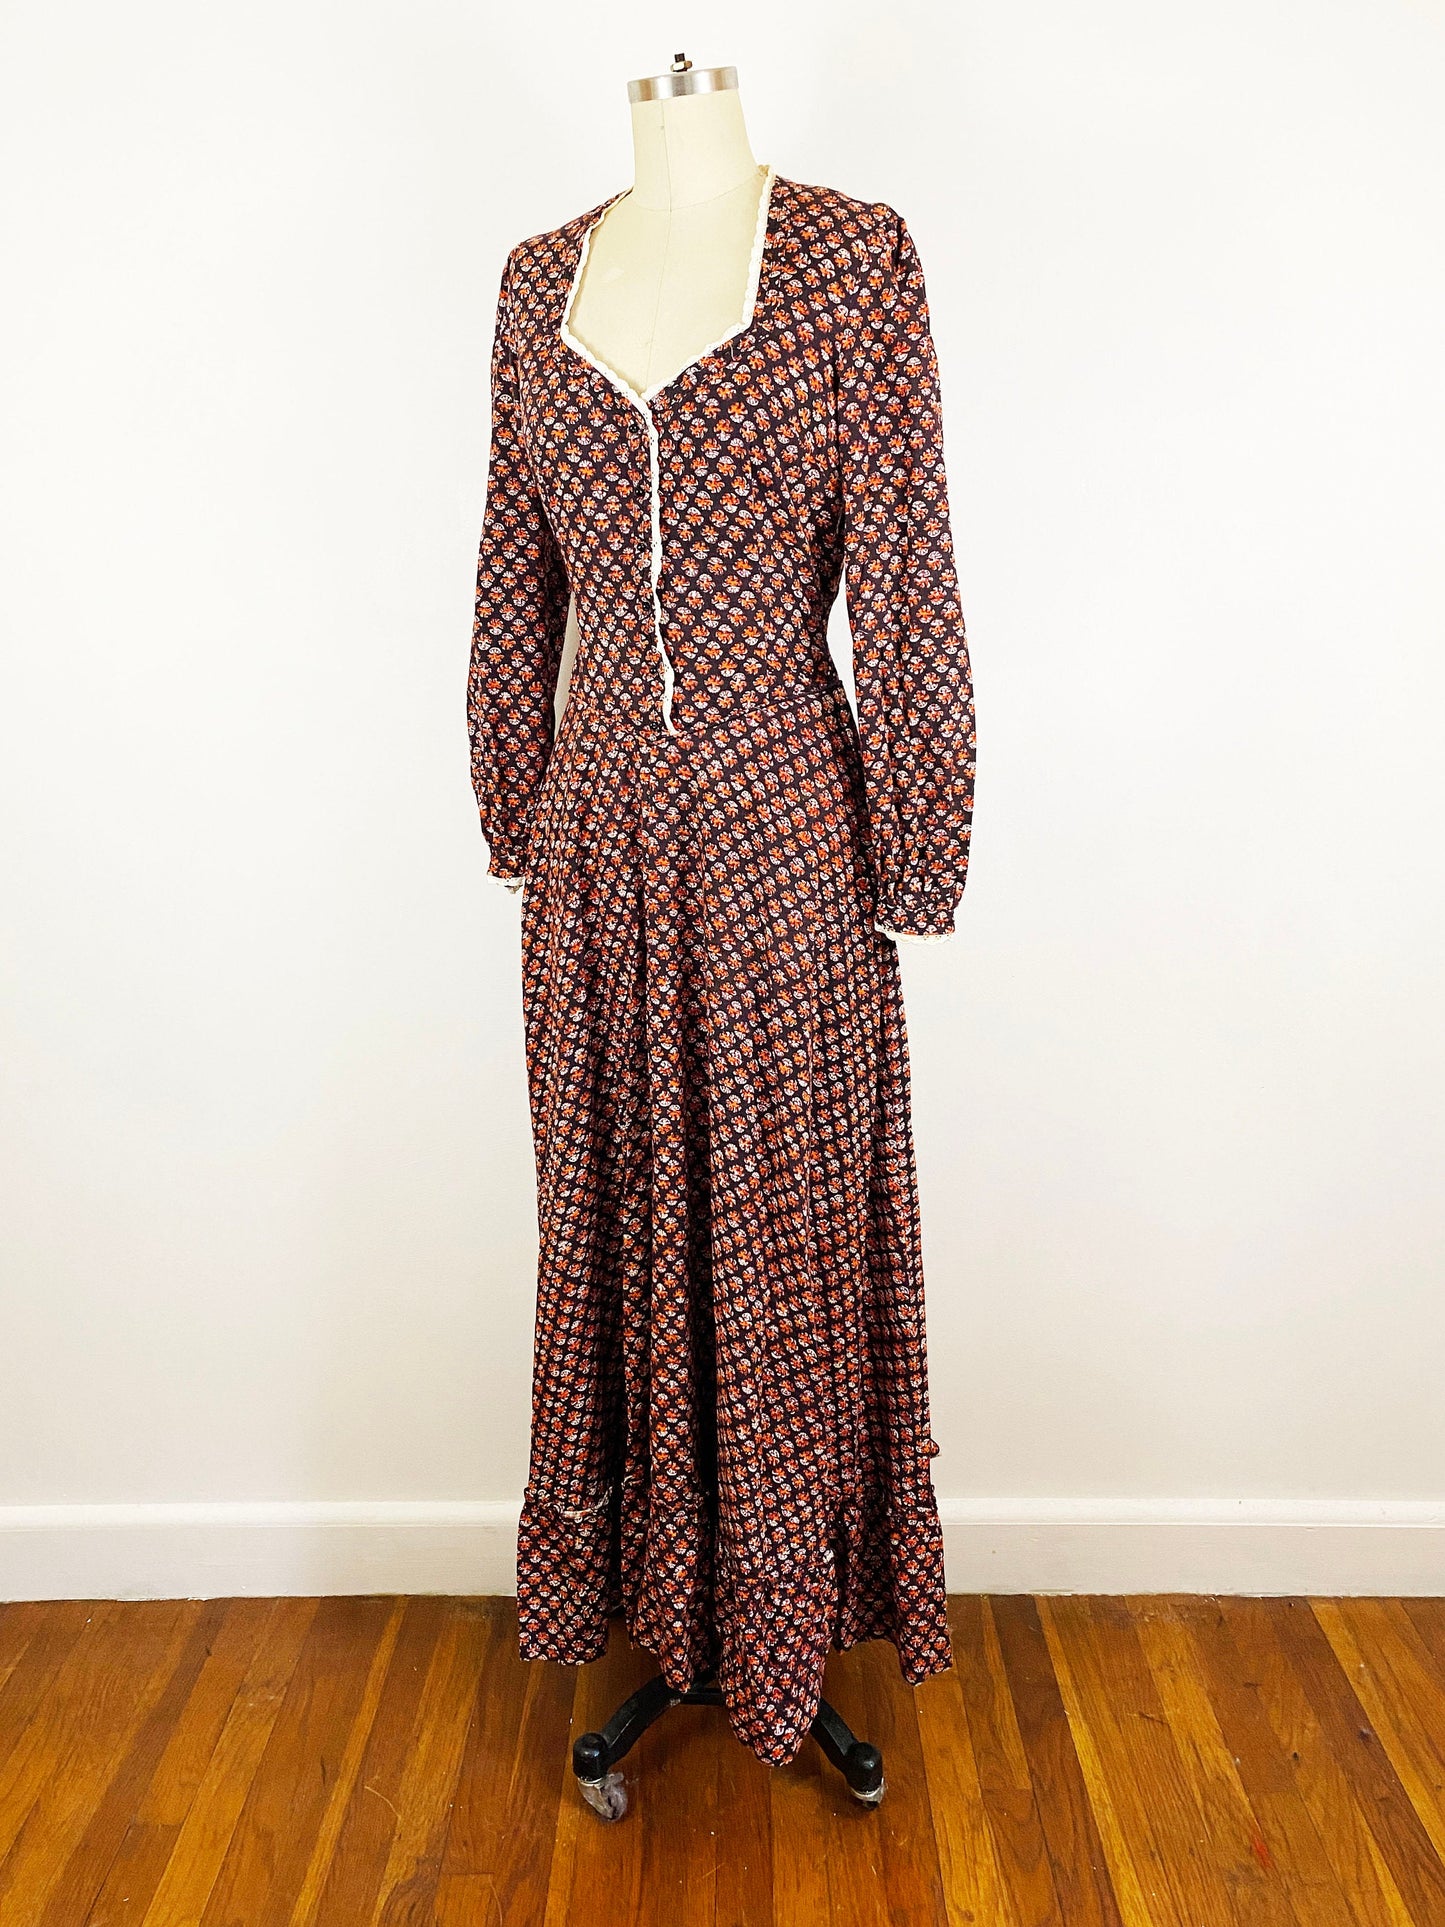 1970s India Imports Cotton Prairie Maxi Dress Block Print Hippie Romantic Peasant Boho Prairie Dress Black Orange / Size Medium 8